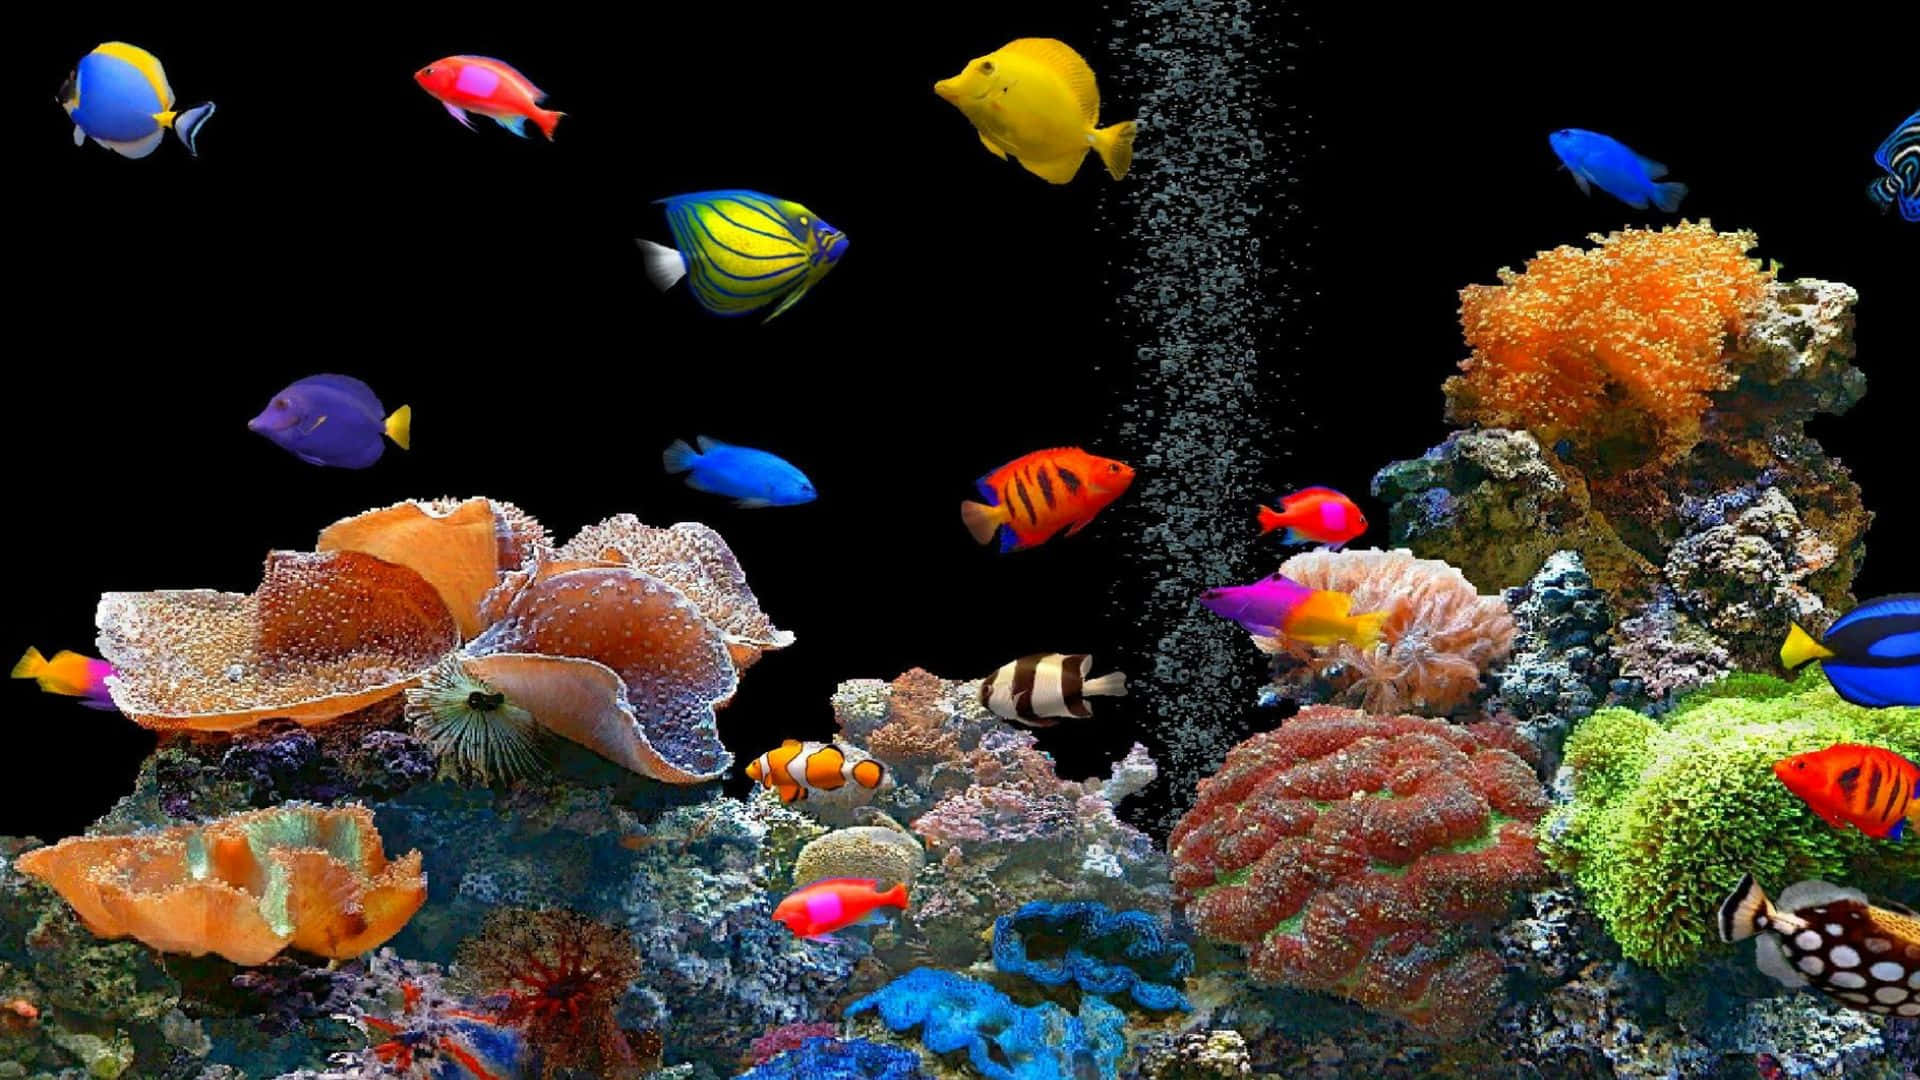 Download Enjoy the beautiful 3D fish tank experience 